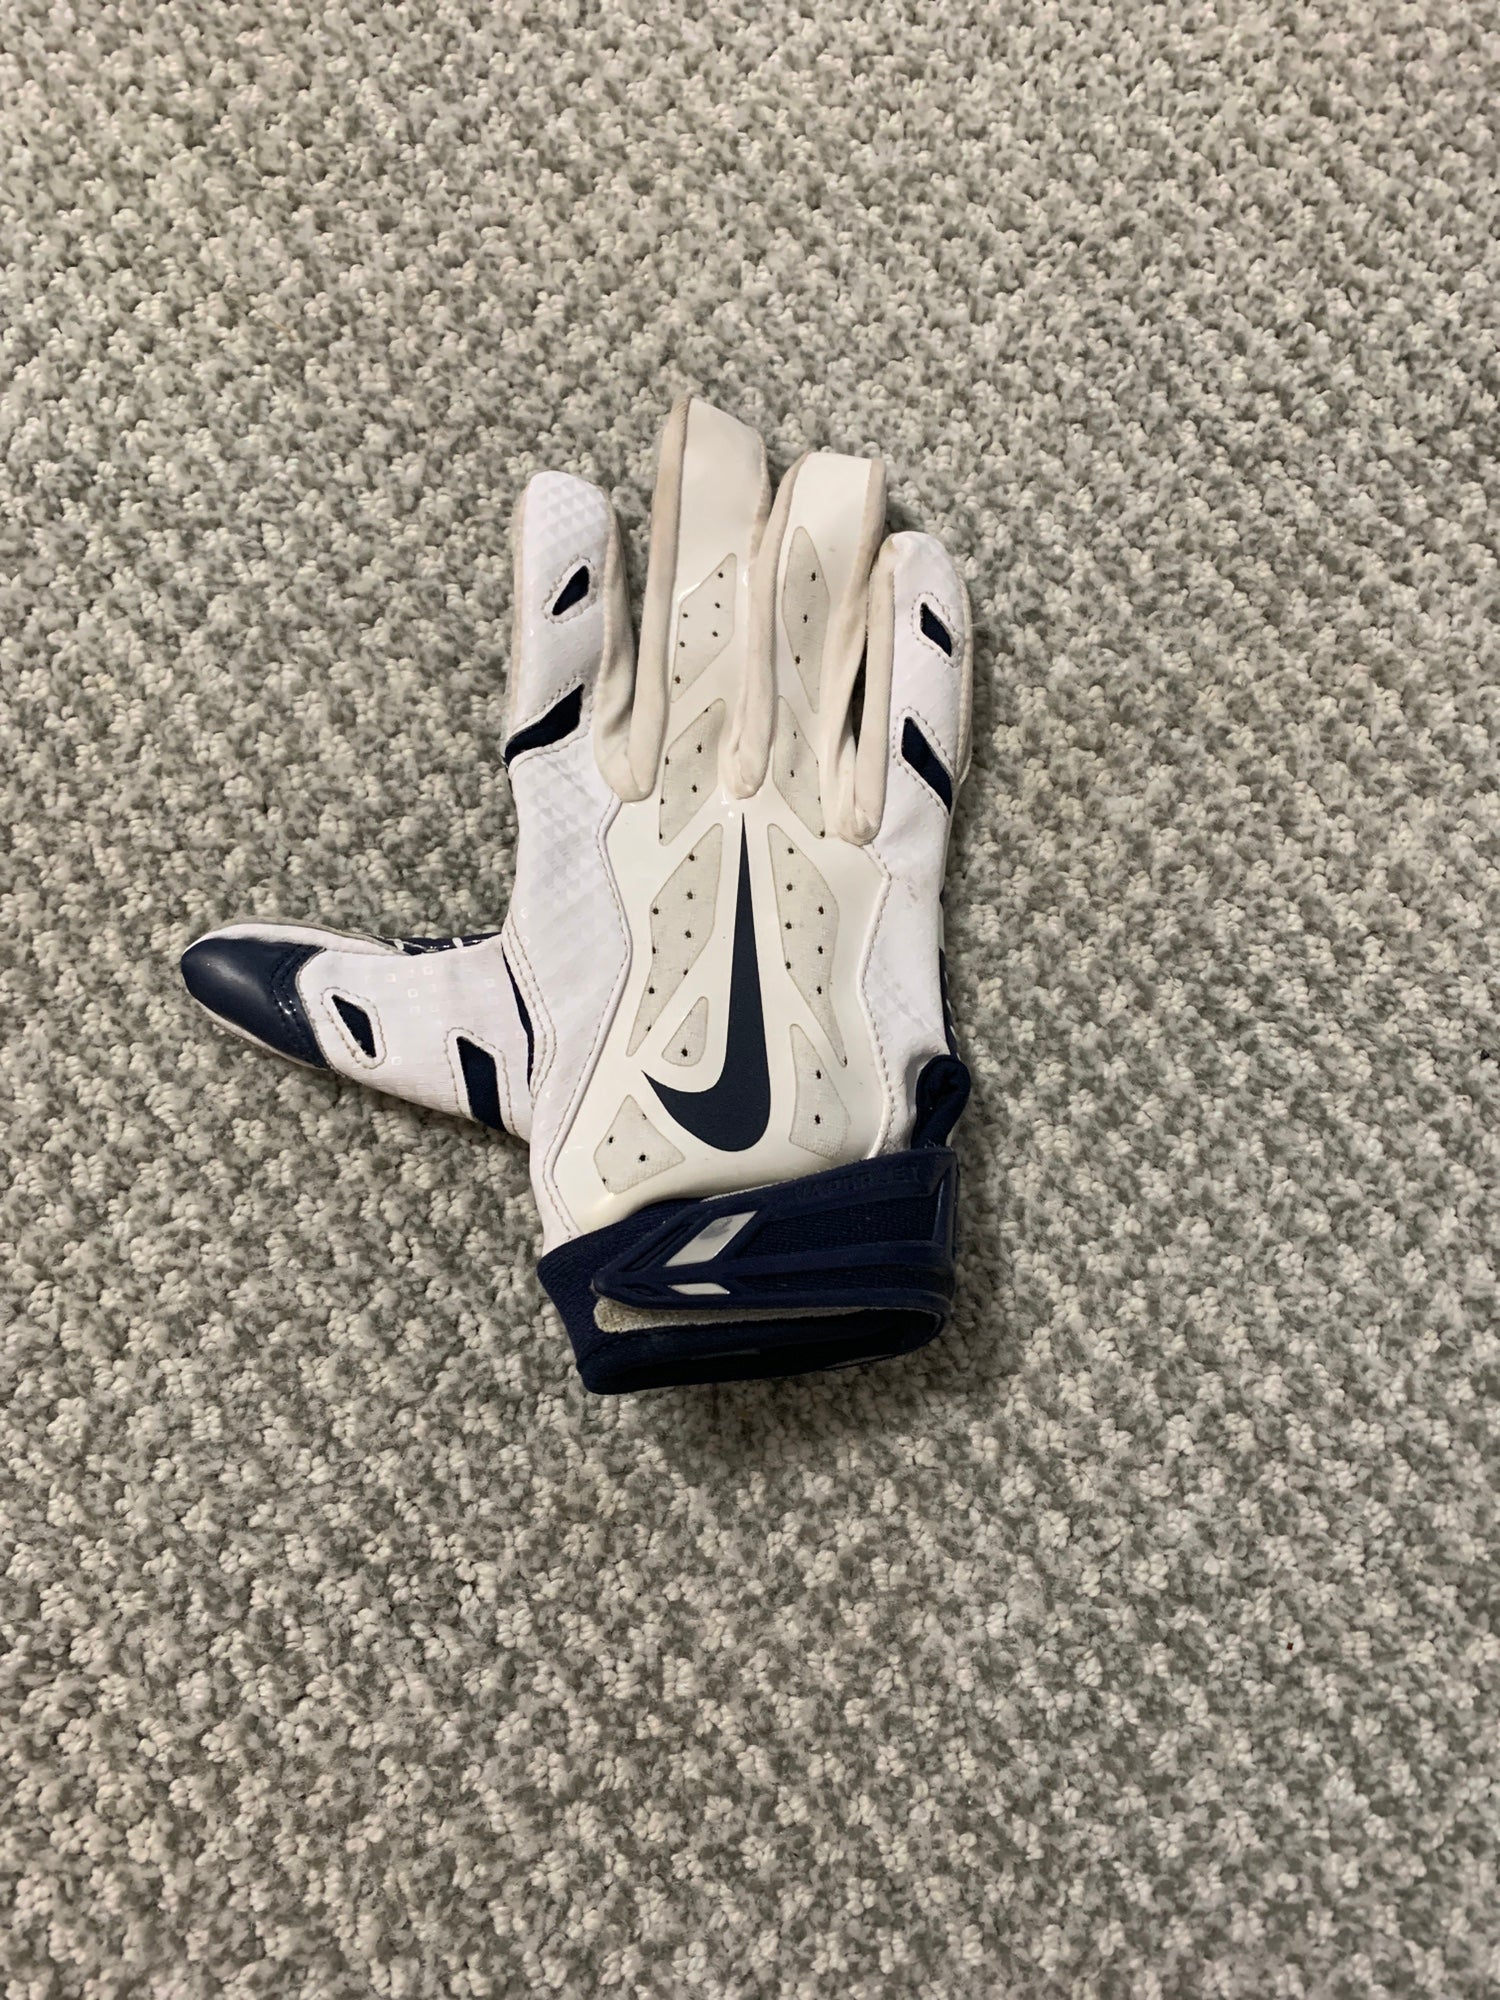 Nike Gloves | SidelineSwap